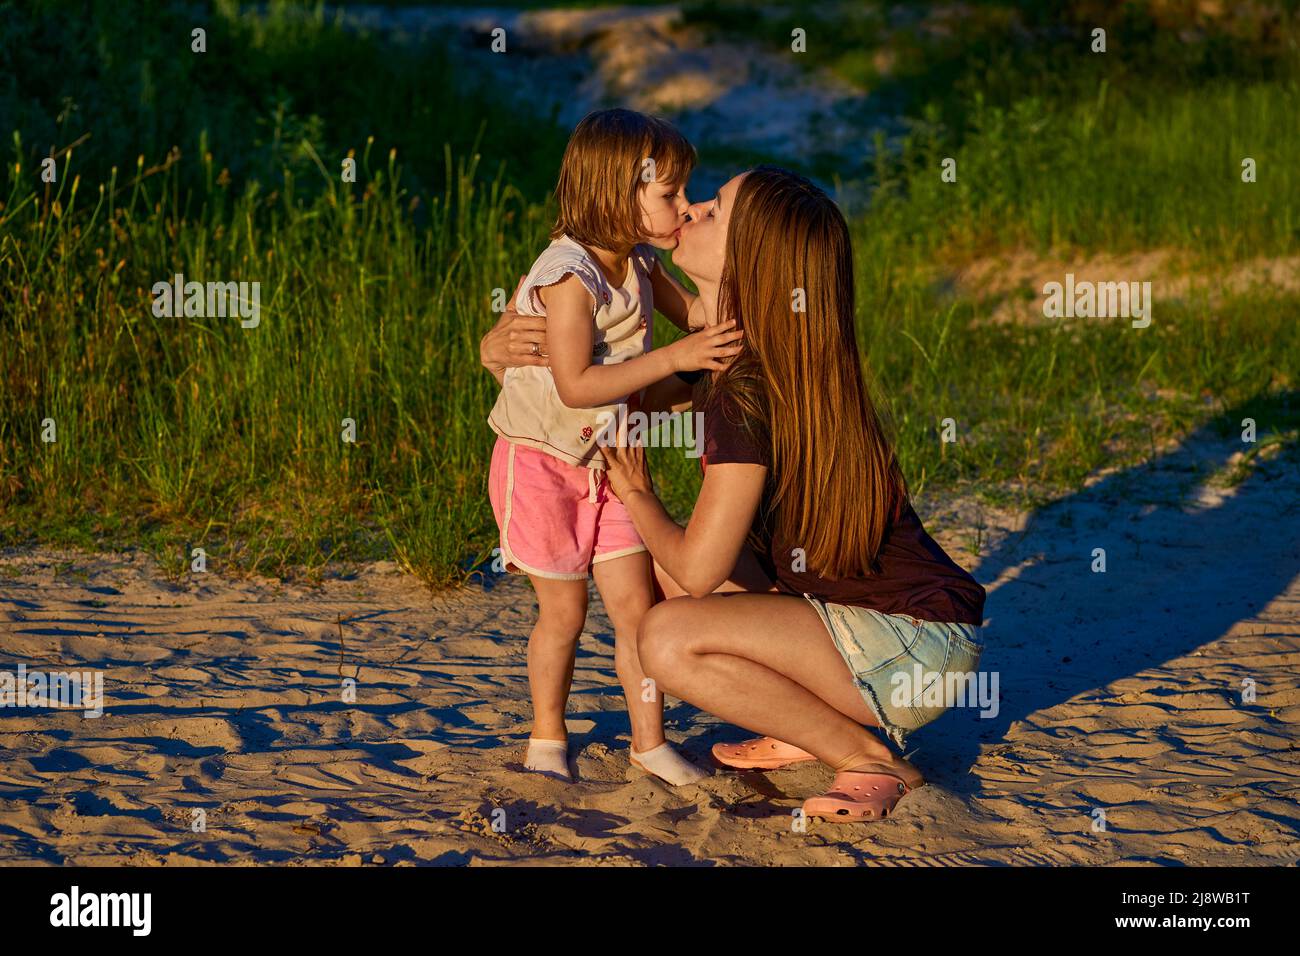 Wonderful cute girl child kissing happy mom among sand dunes and greenery Stock Photo